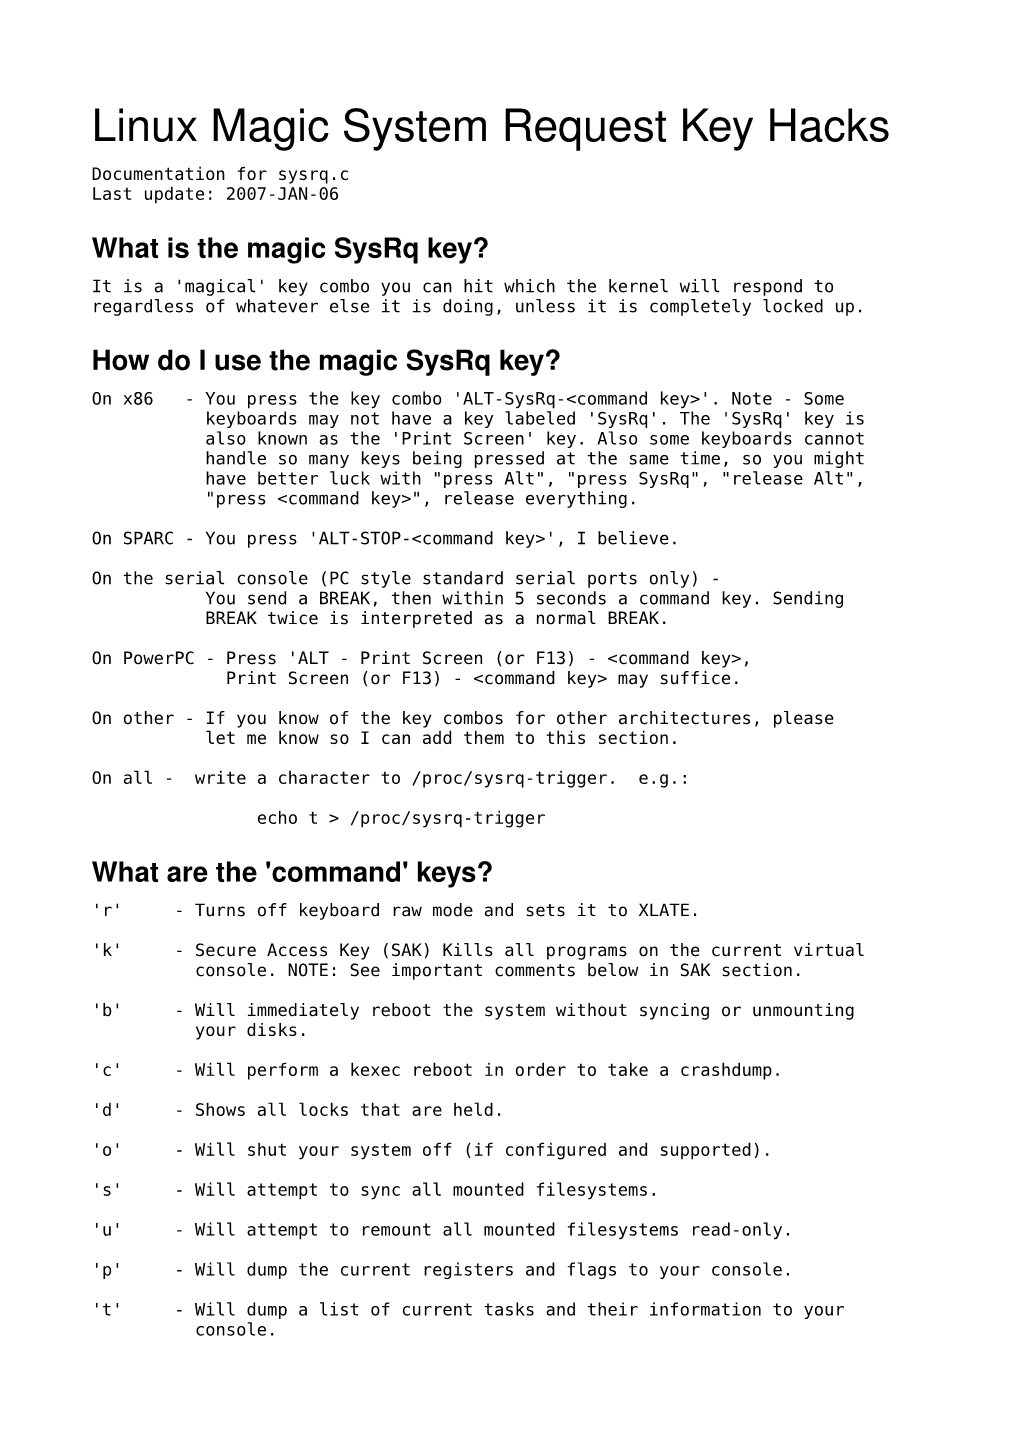 Linux Magic System Request Key Hacks Documentation for Sysrq.C Last Update: 2007-JAN-06